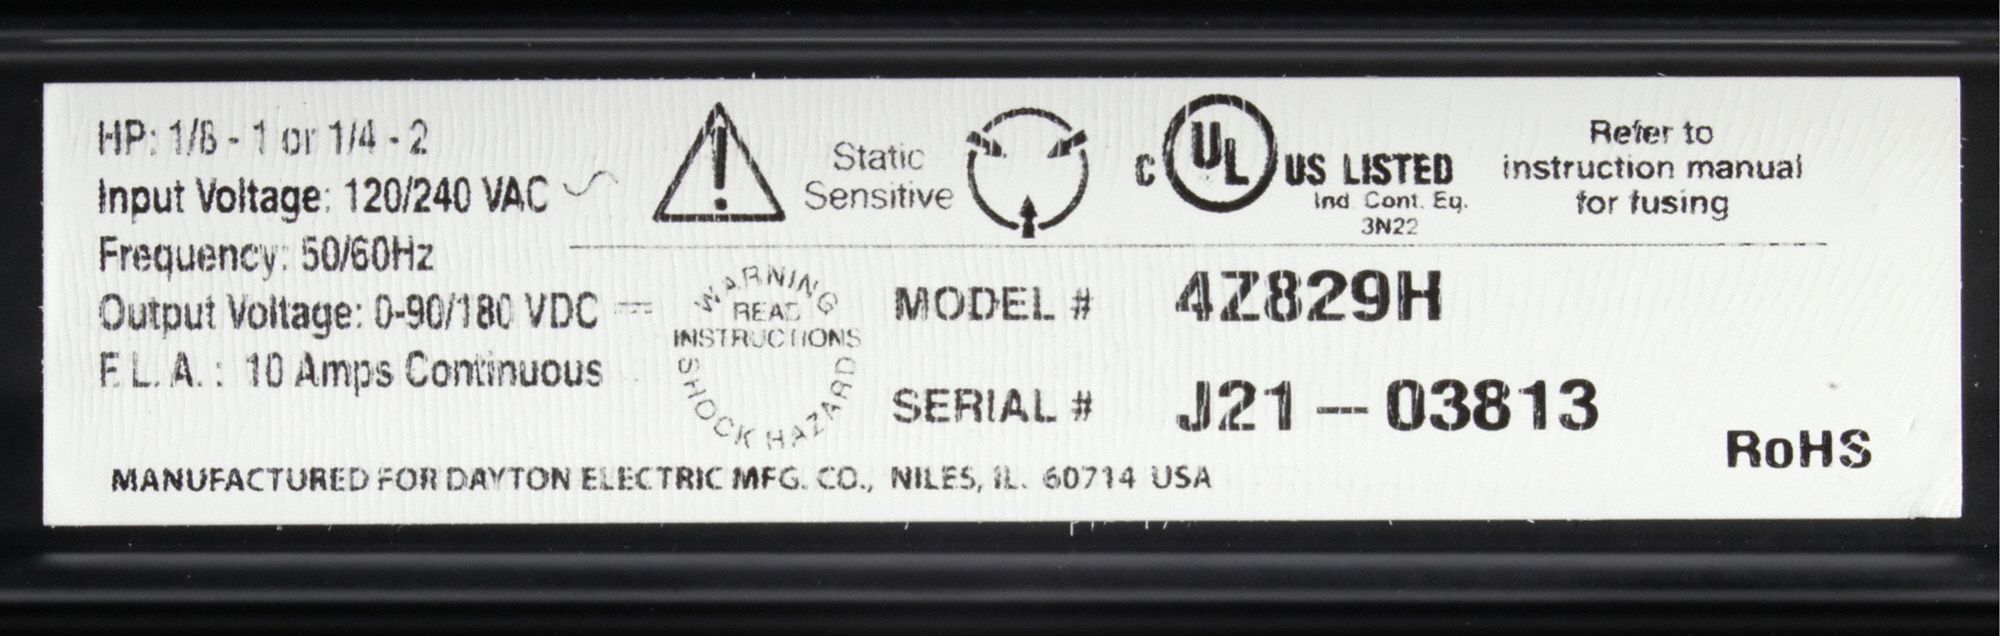 DAYTON DC Speed Control,90/180VDC,NEMA 4/12 4Z829 